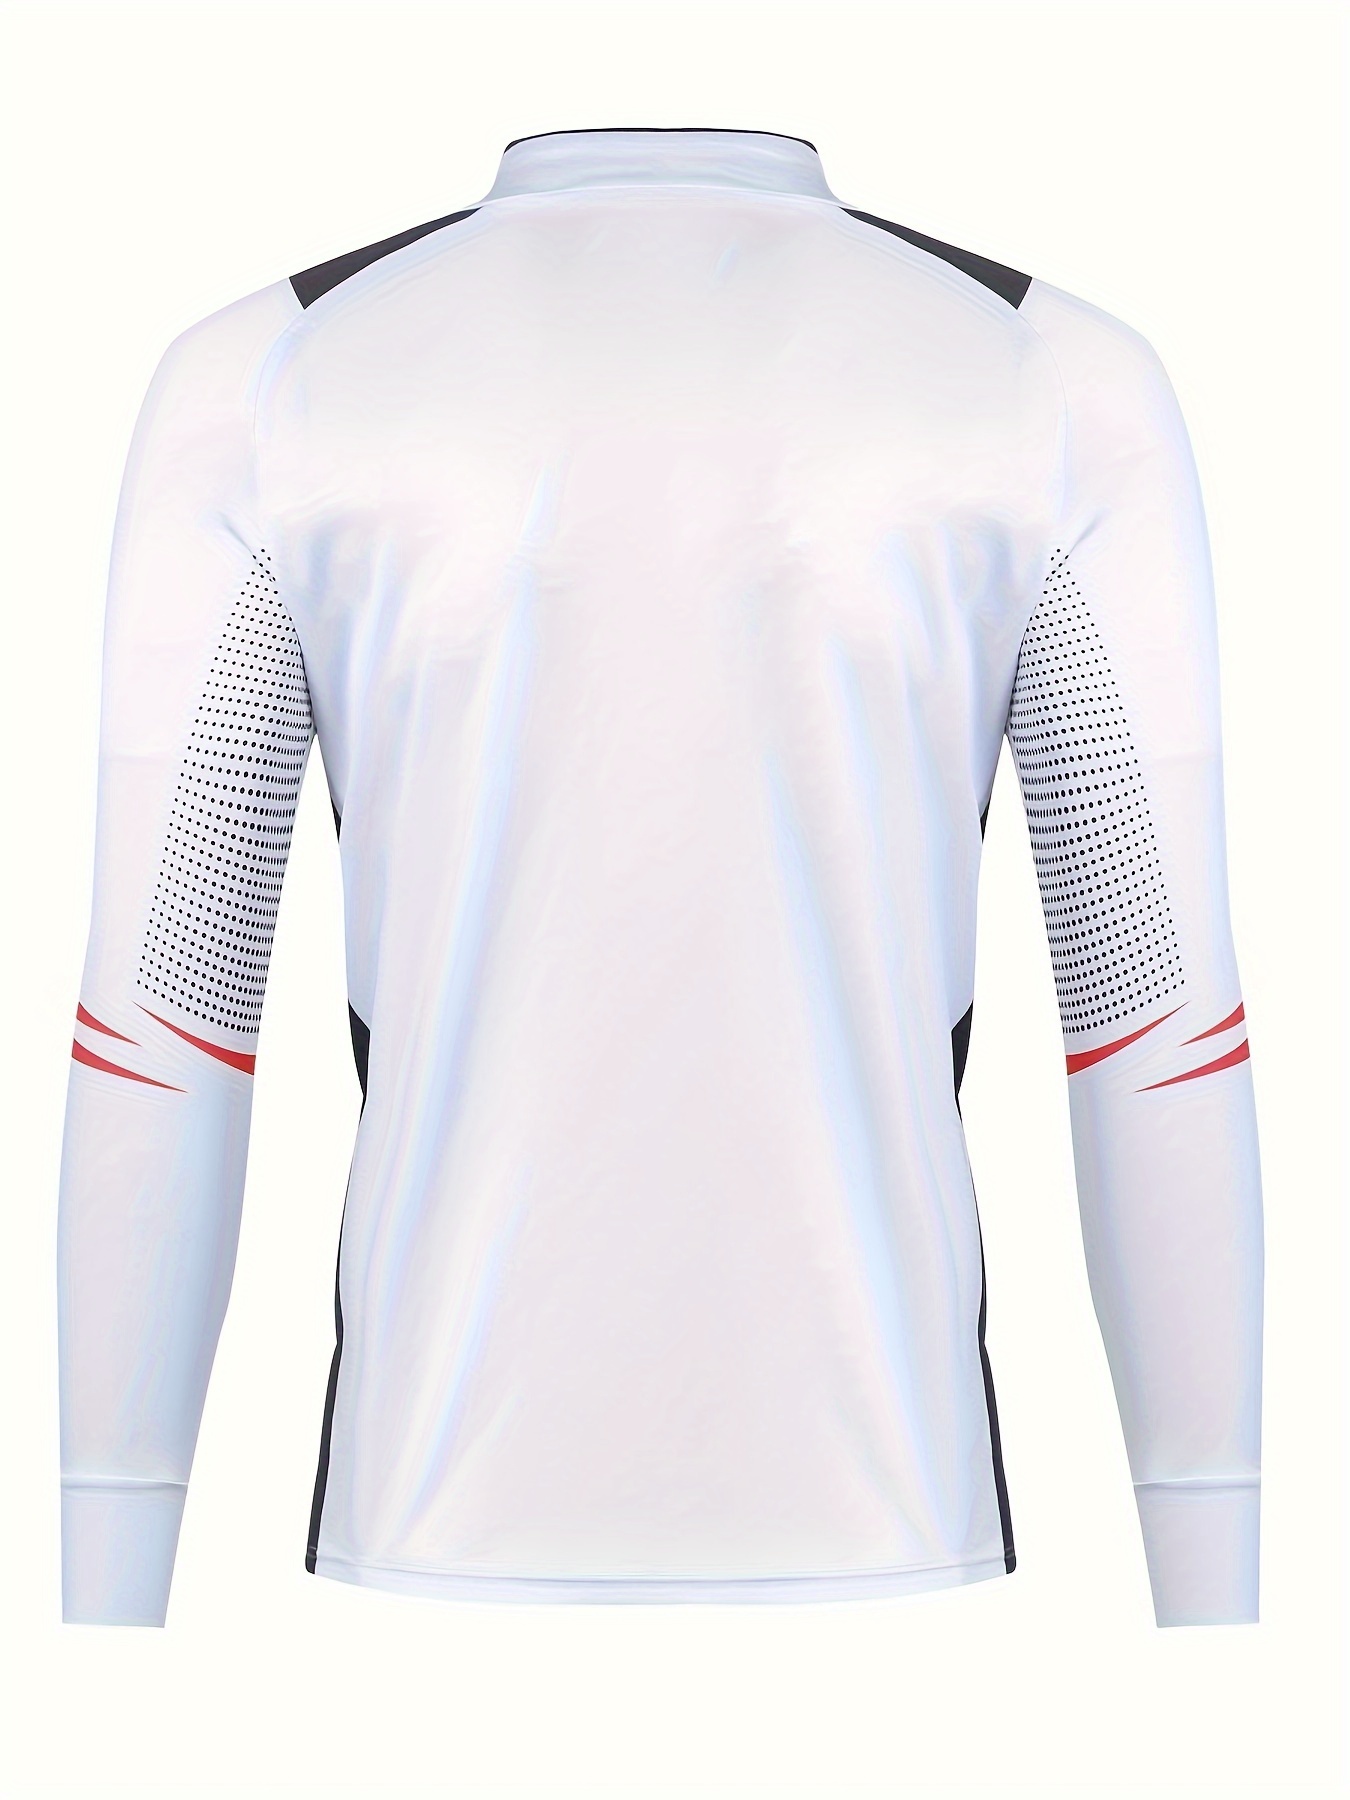 Men's UPF 50+ UV Protection Long Sleeve T-Shirt Sun Block Casual